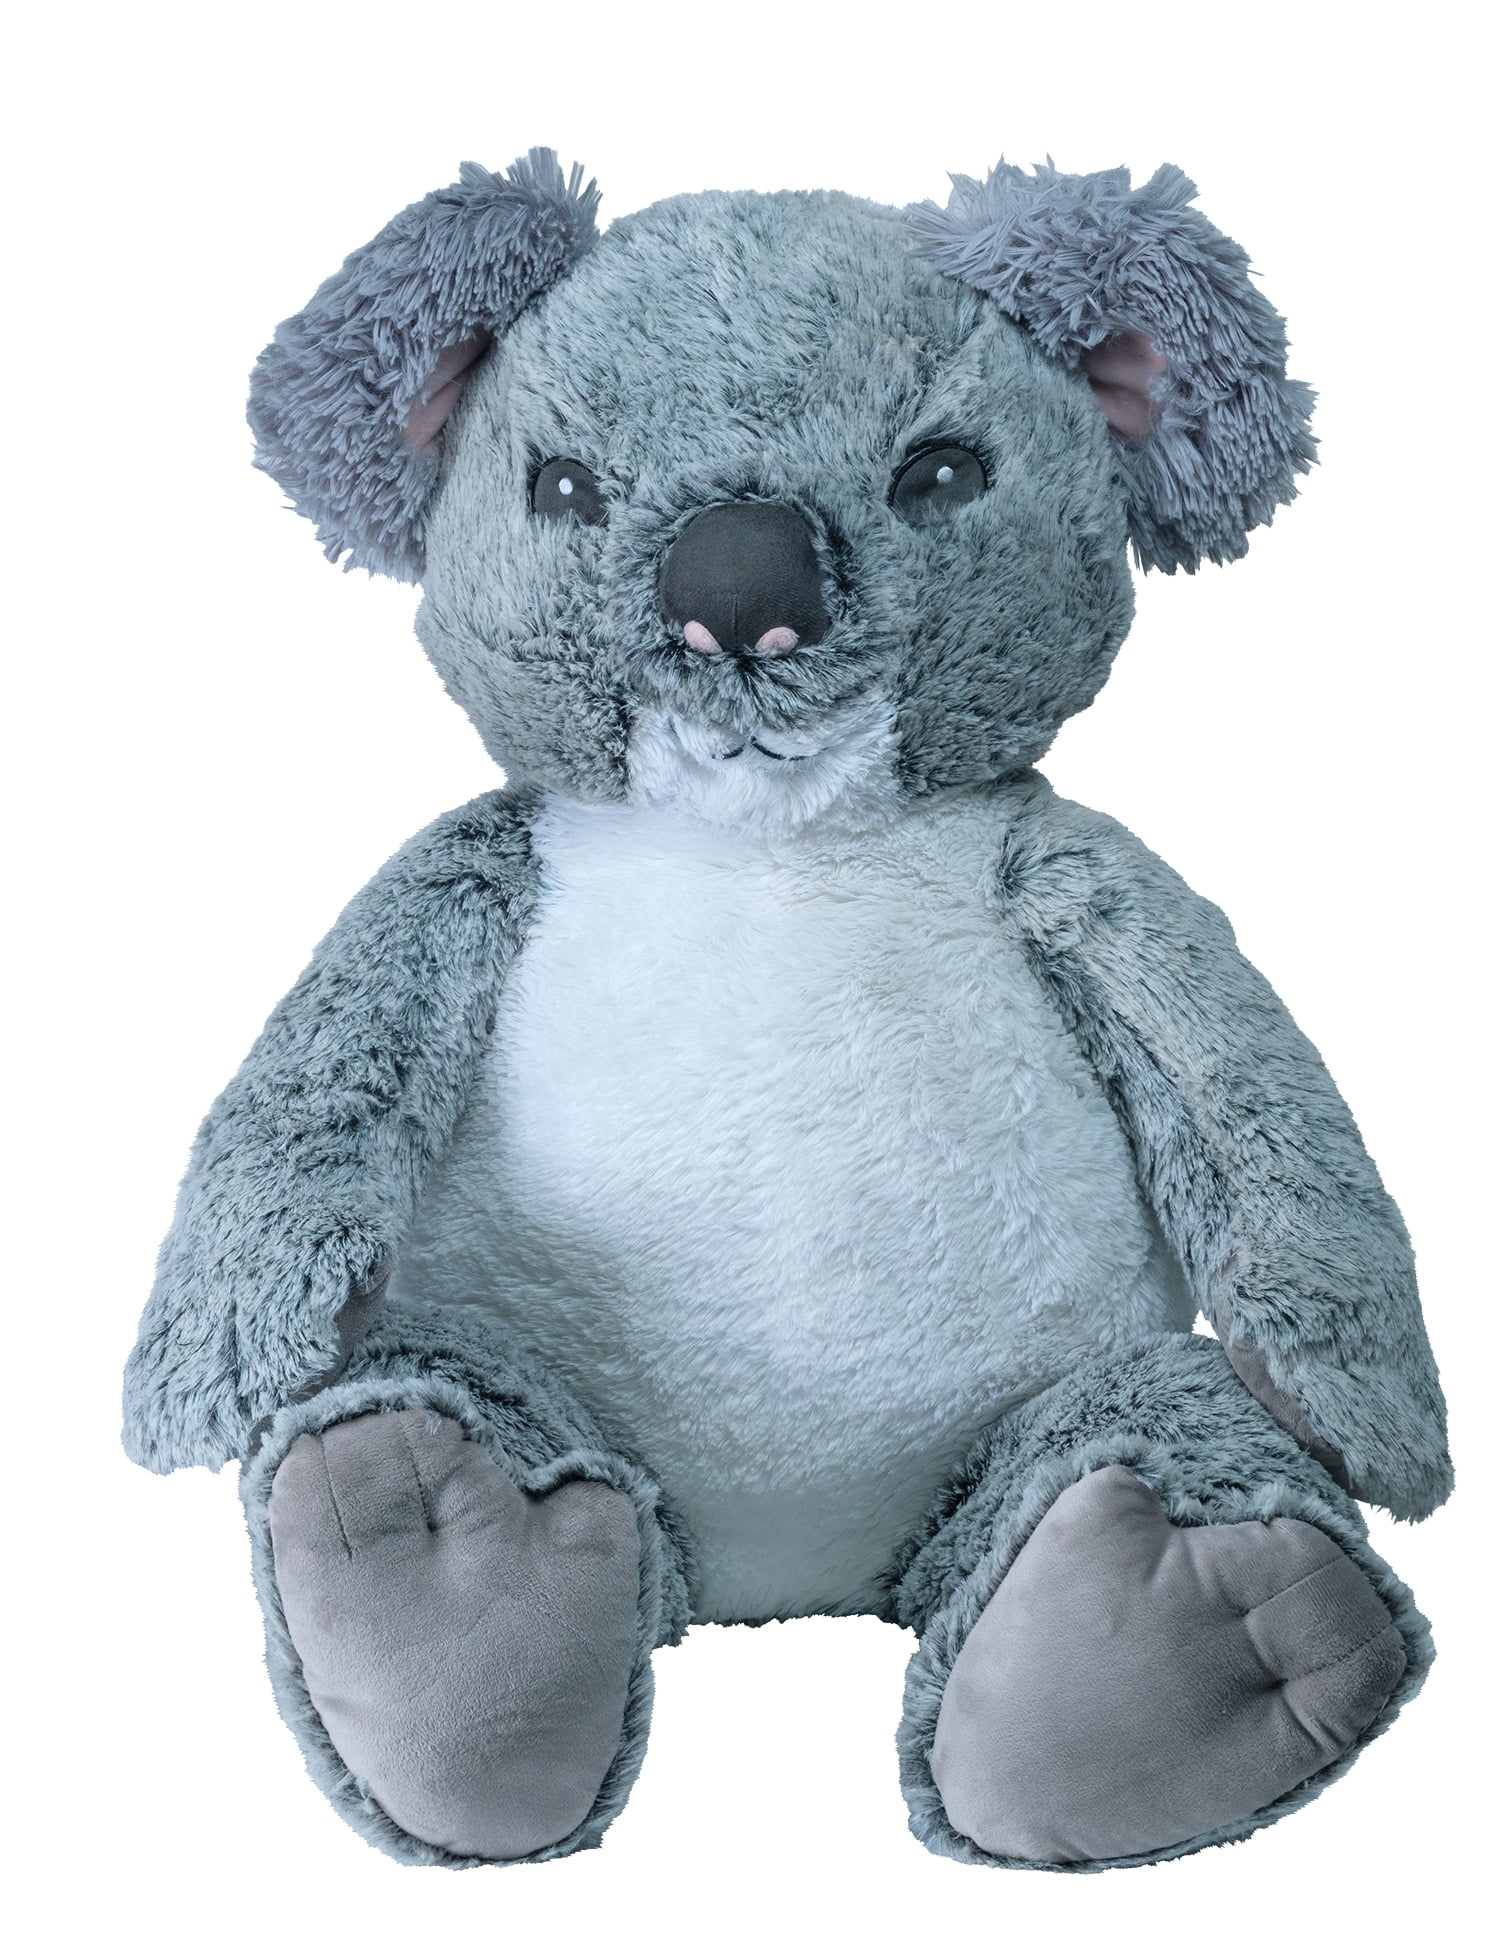 Koda - The Plush Koala Bear Toy - 40 Inches Tall 